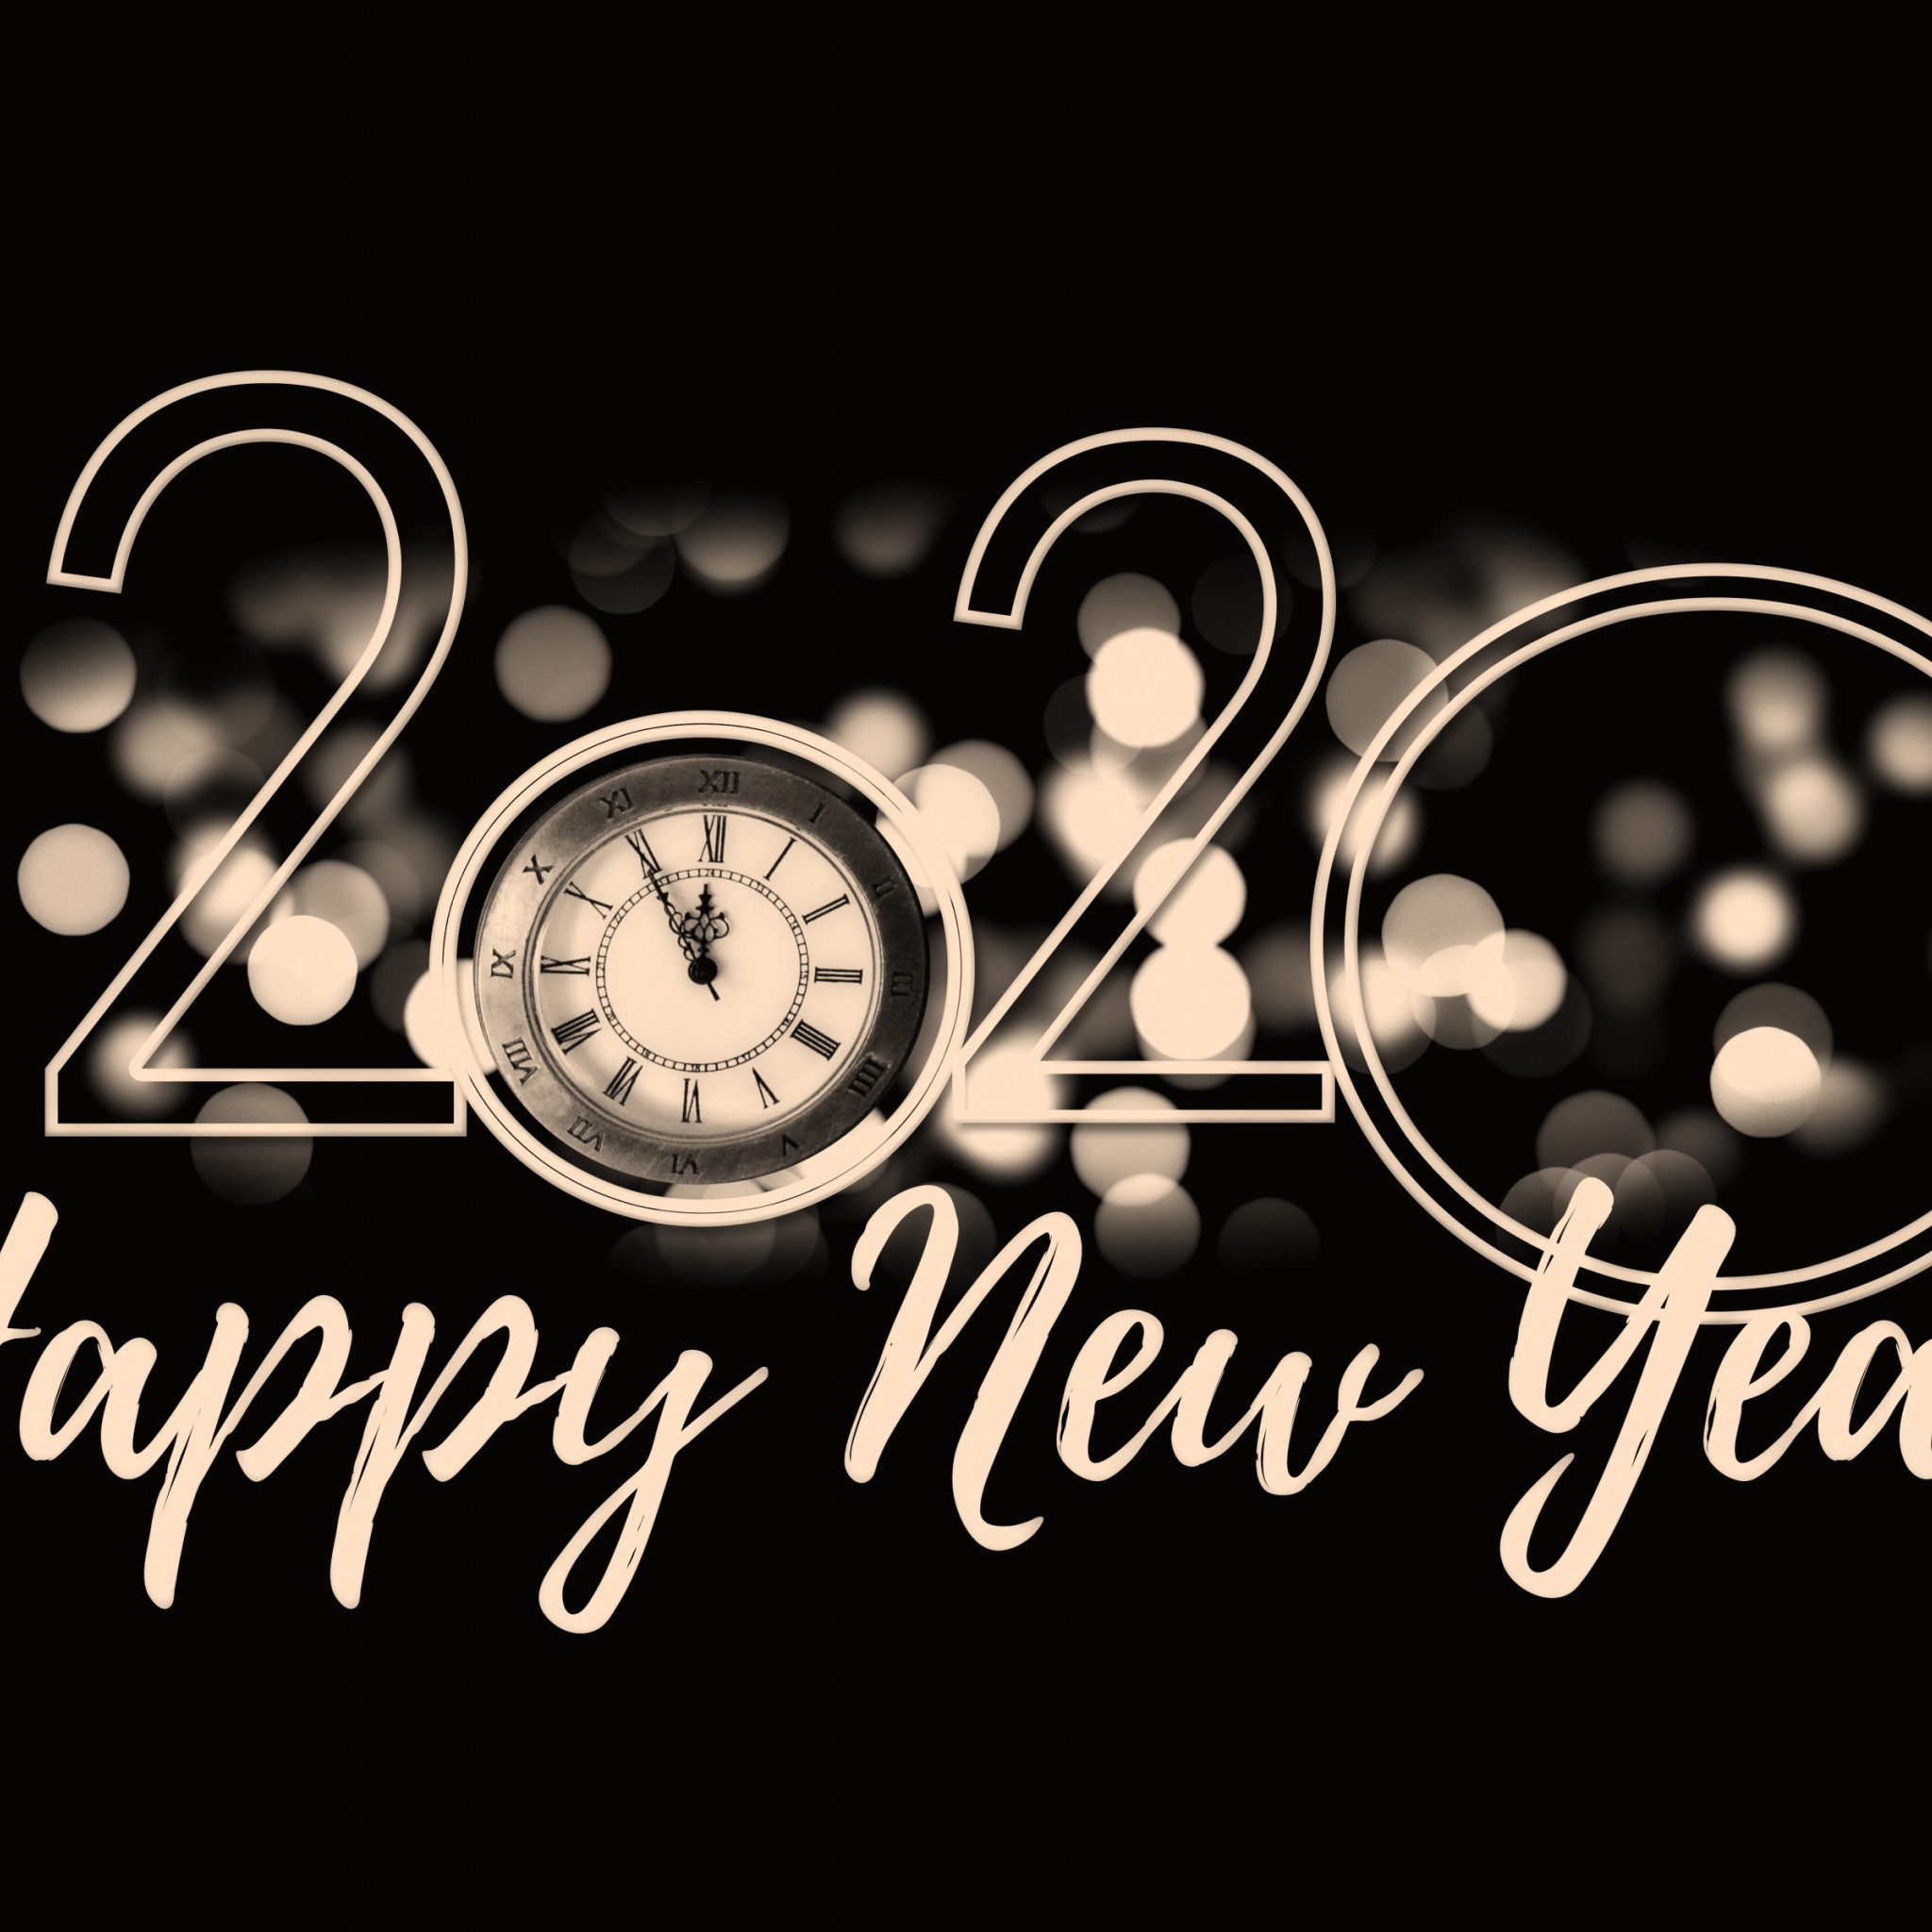 2020 Happy New Year wallpaper 2048x2048